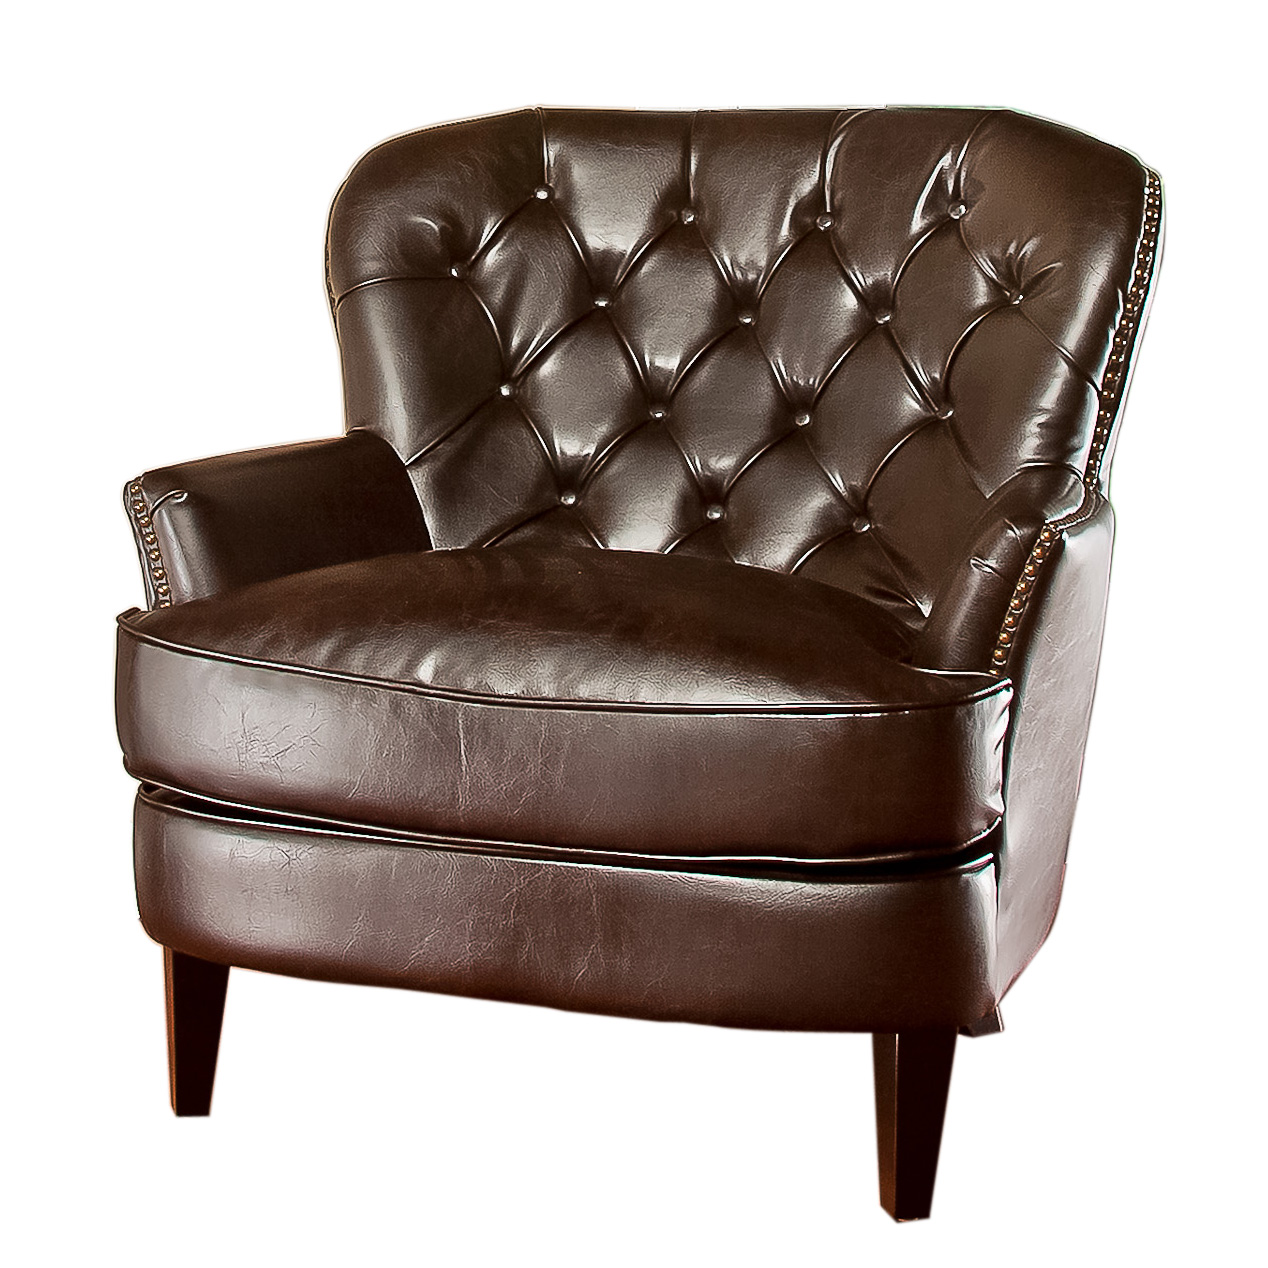 Tafton Brown Leather Club Chair